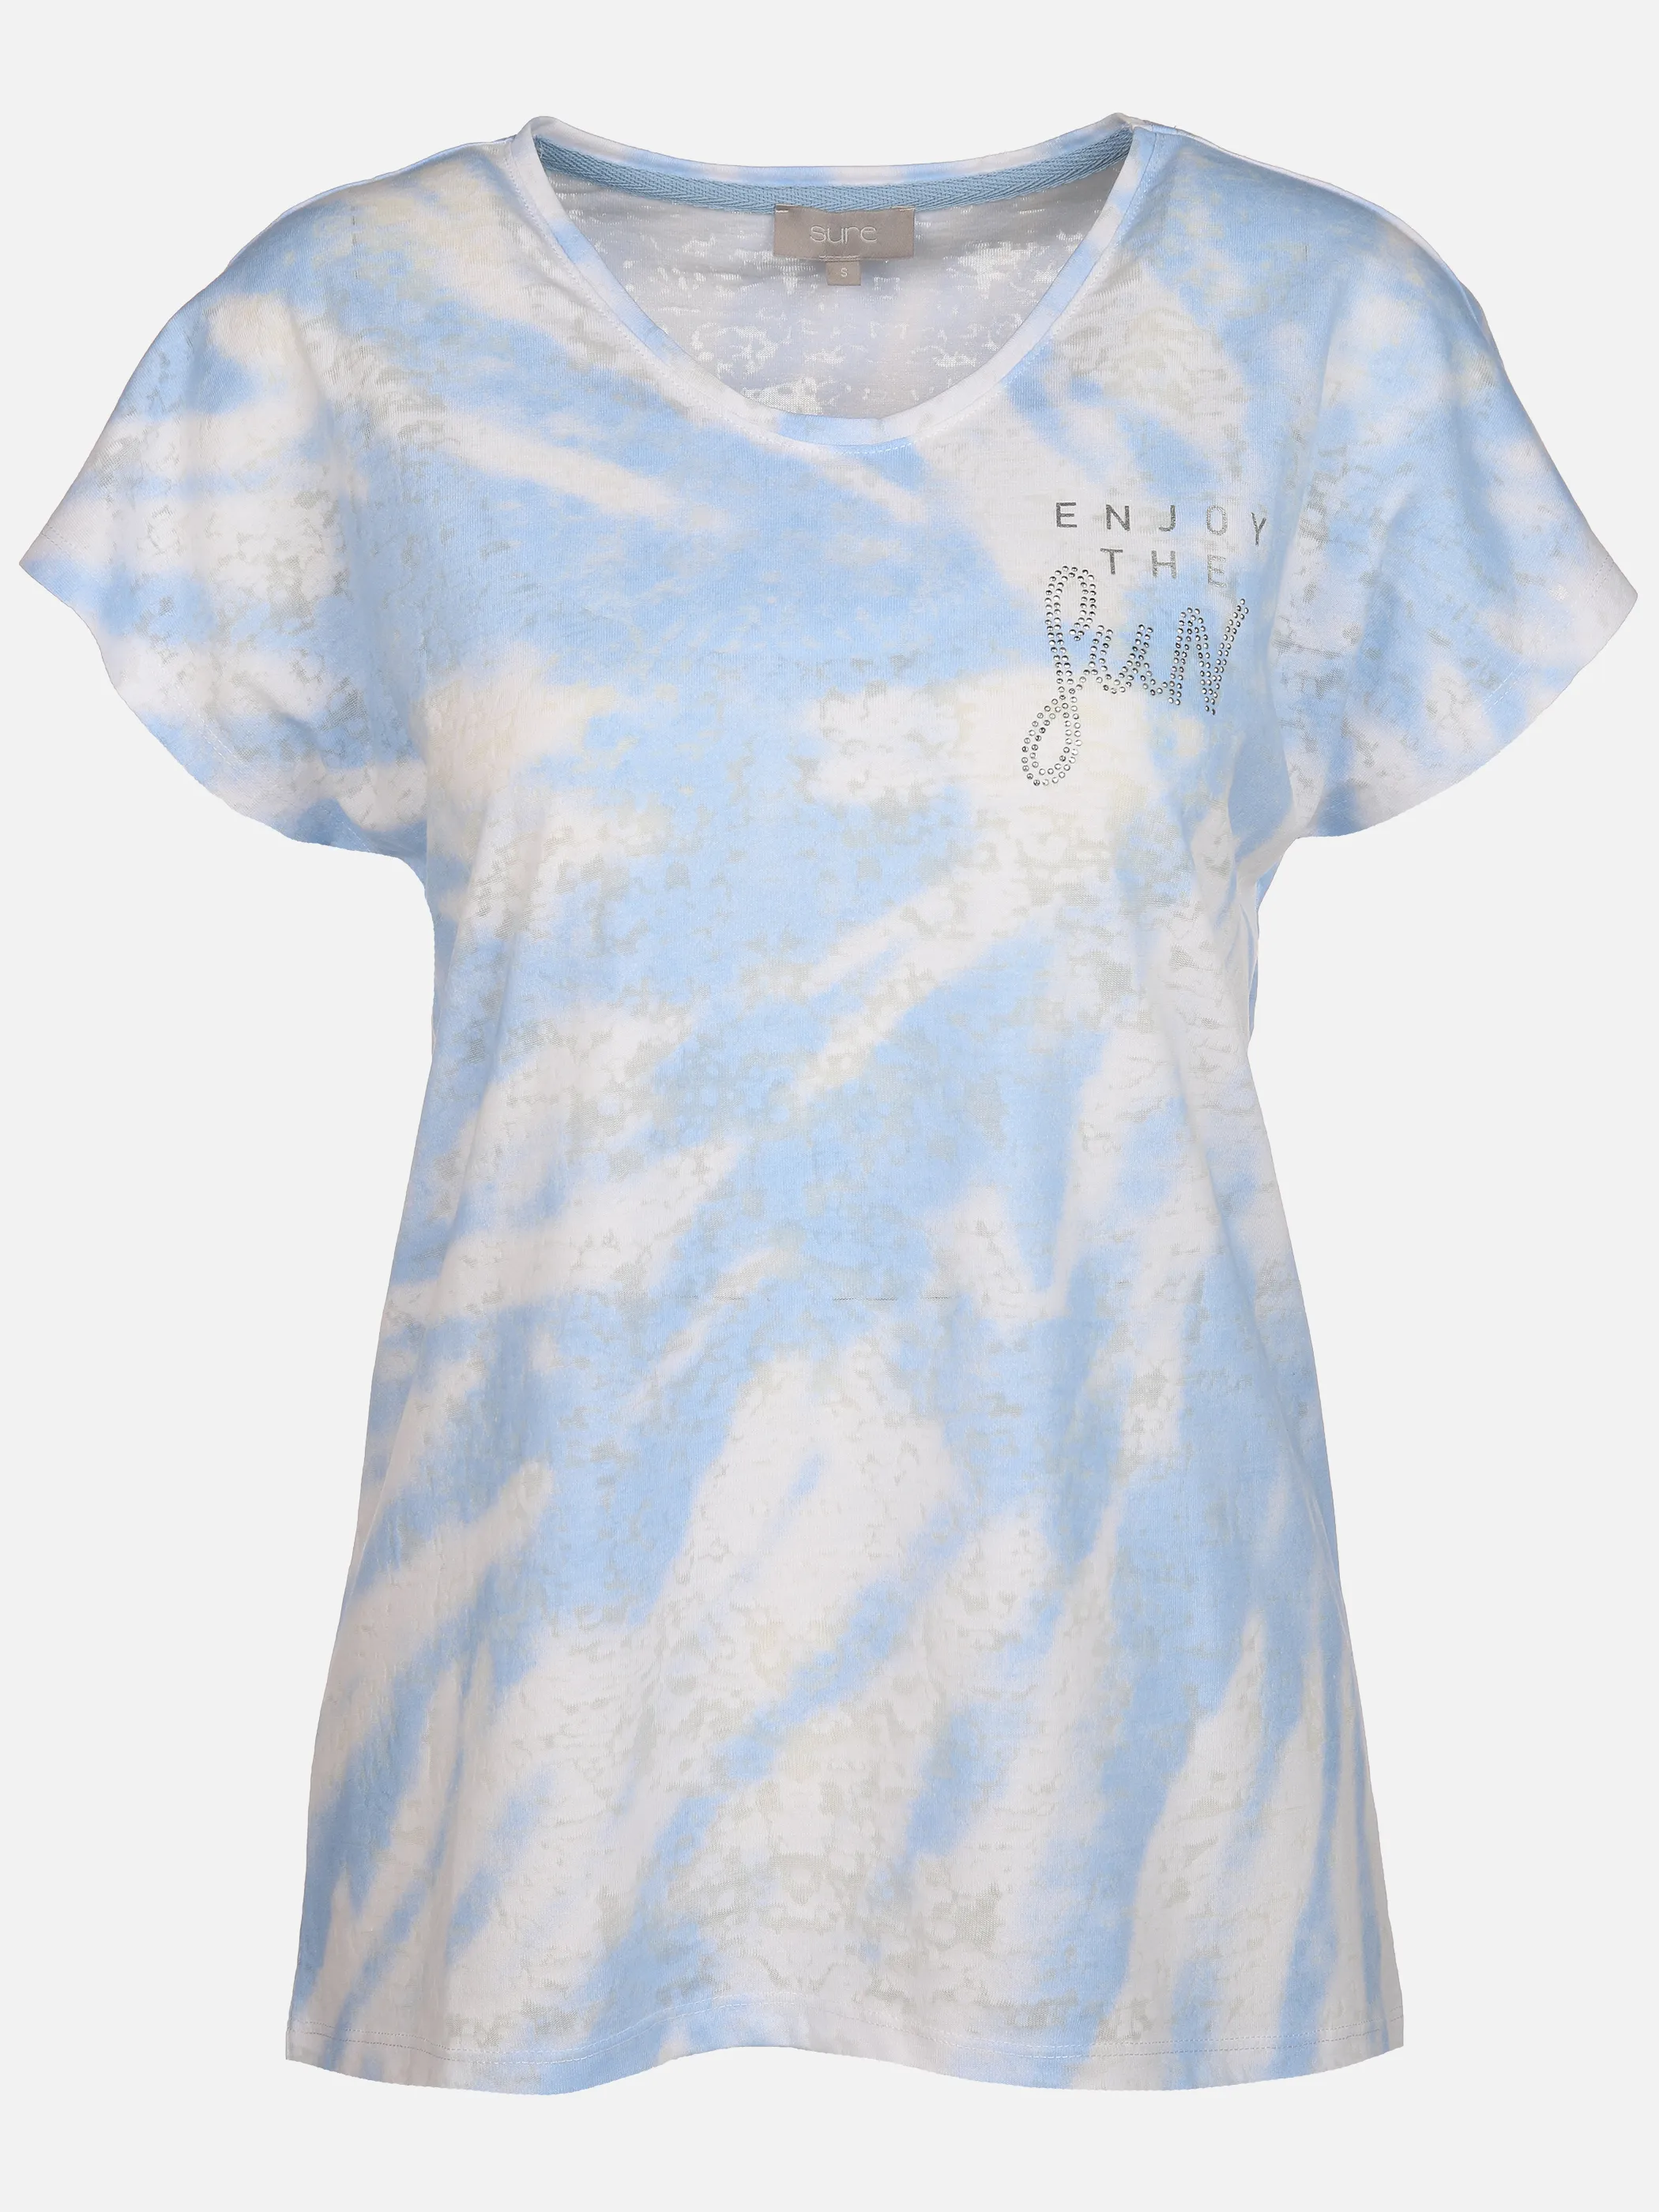 Sure Da-T-Shirt m. Batikdruck Blau 889927 CLOUD BLUE 1